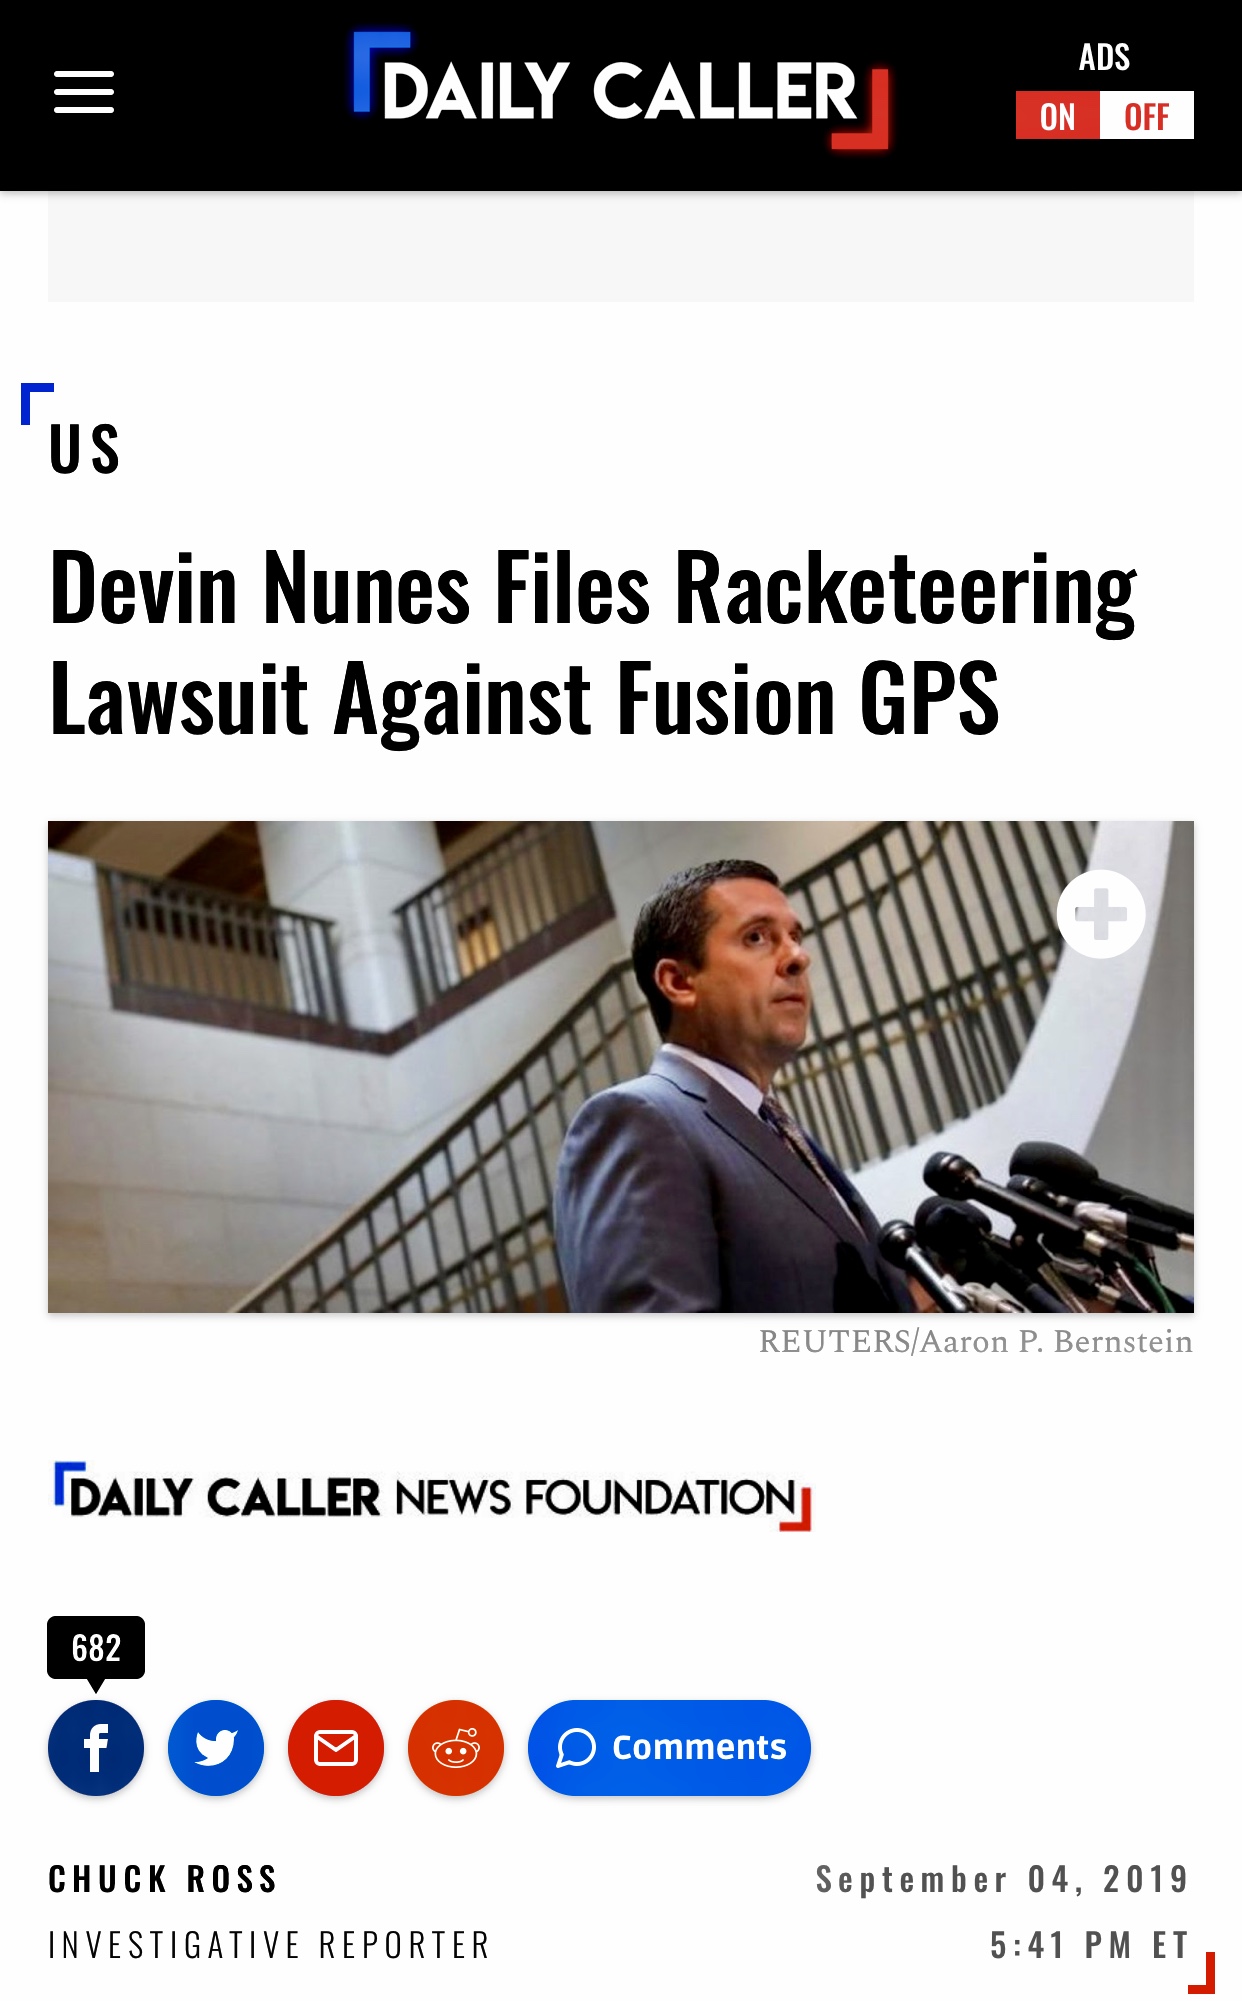 Devin Nunes Files Racketeering Lawsuit Against Fusion GPS